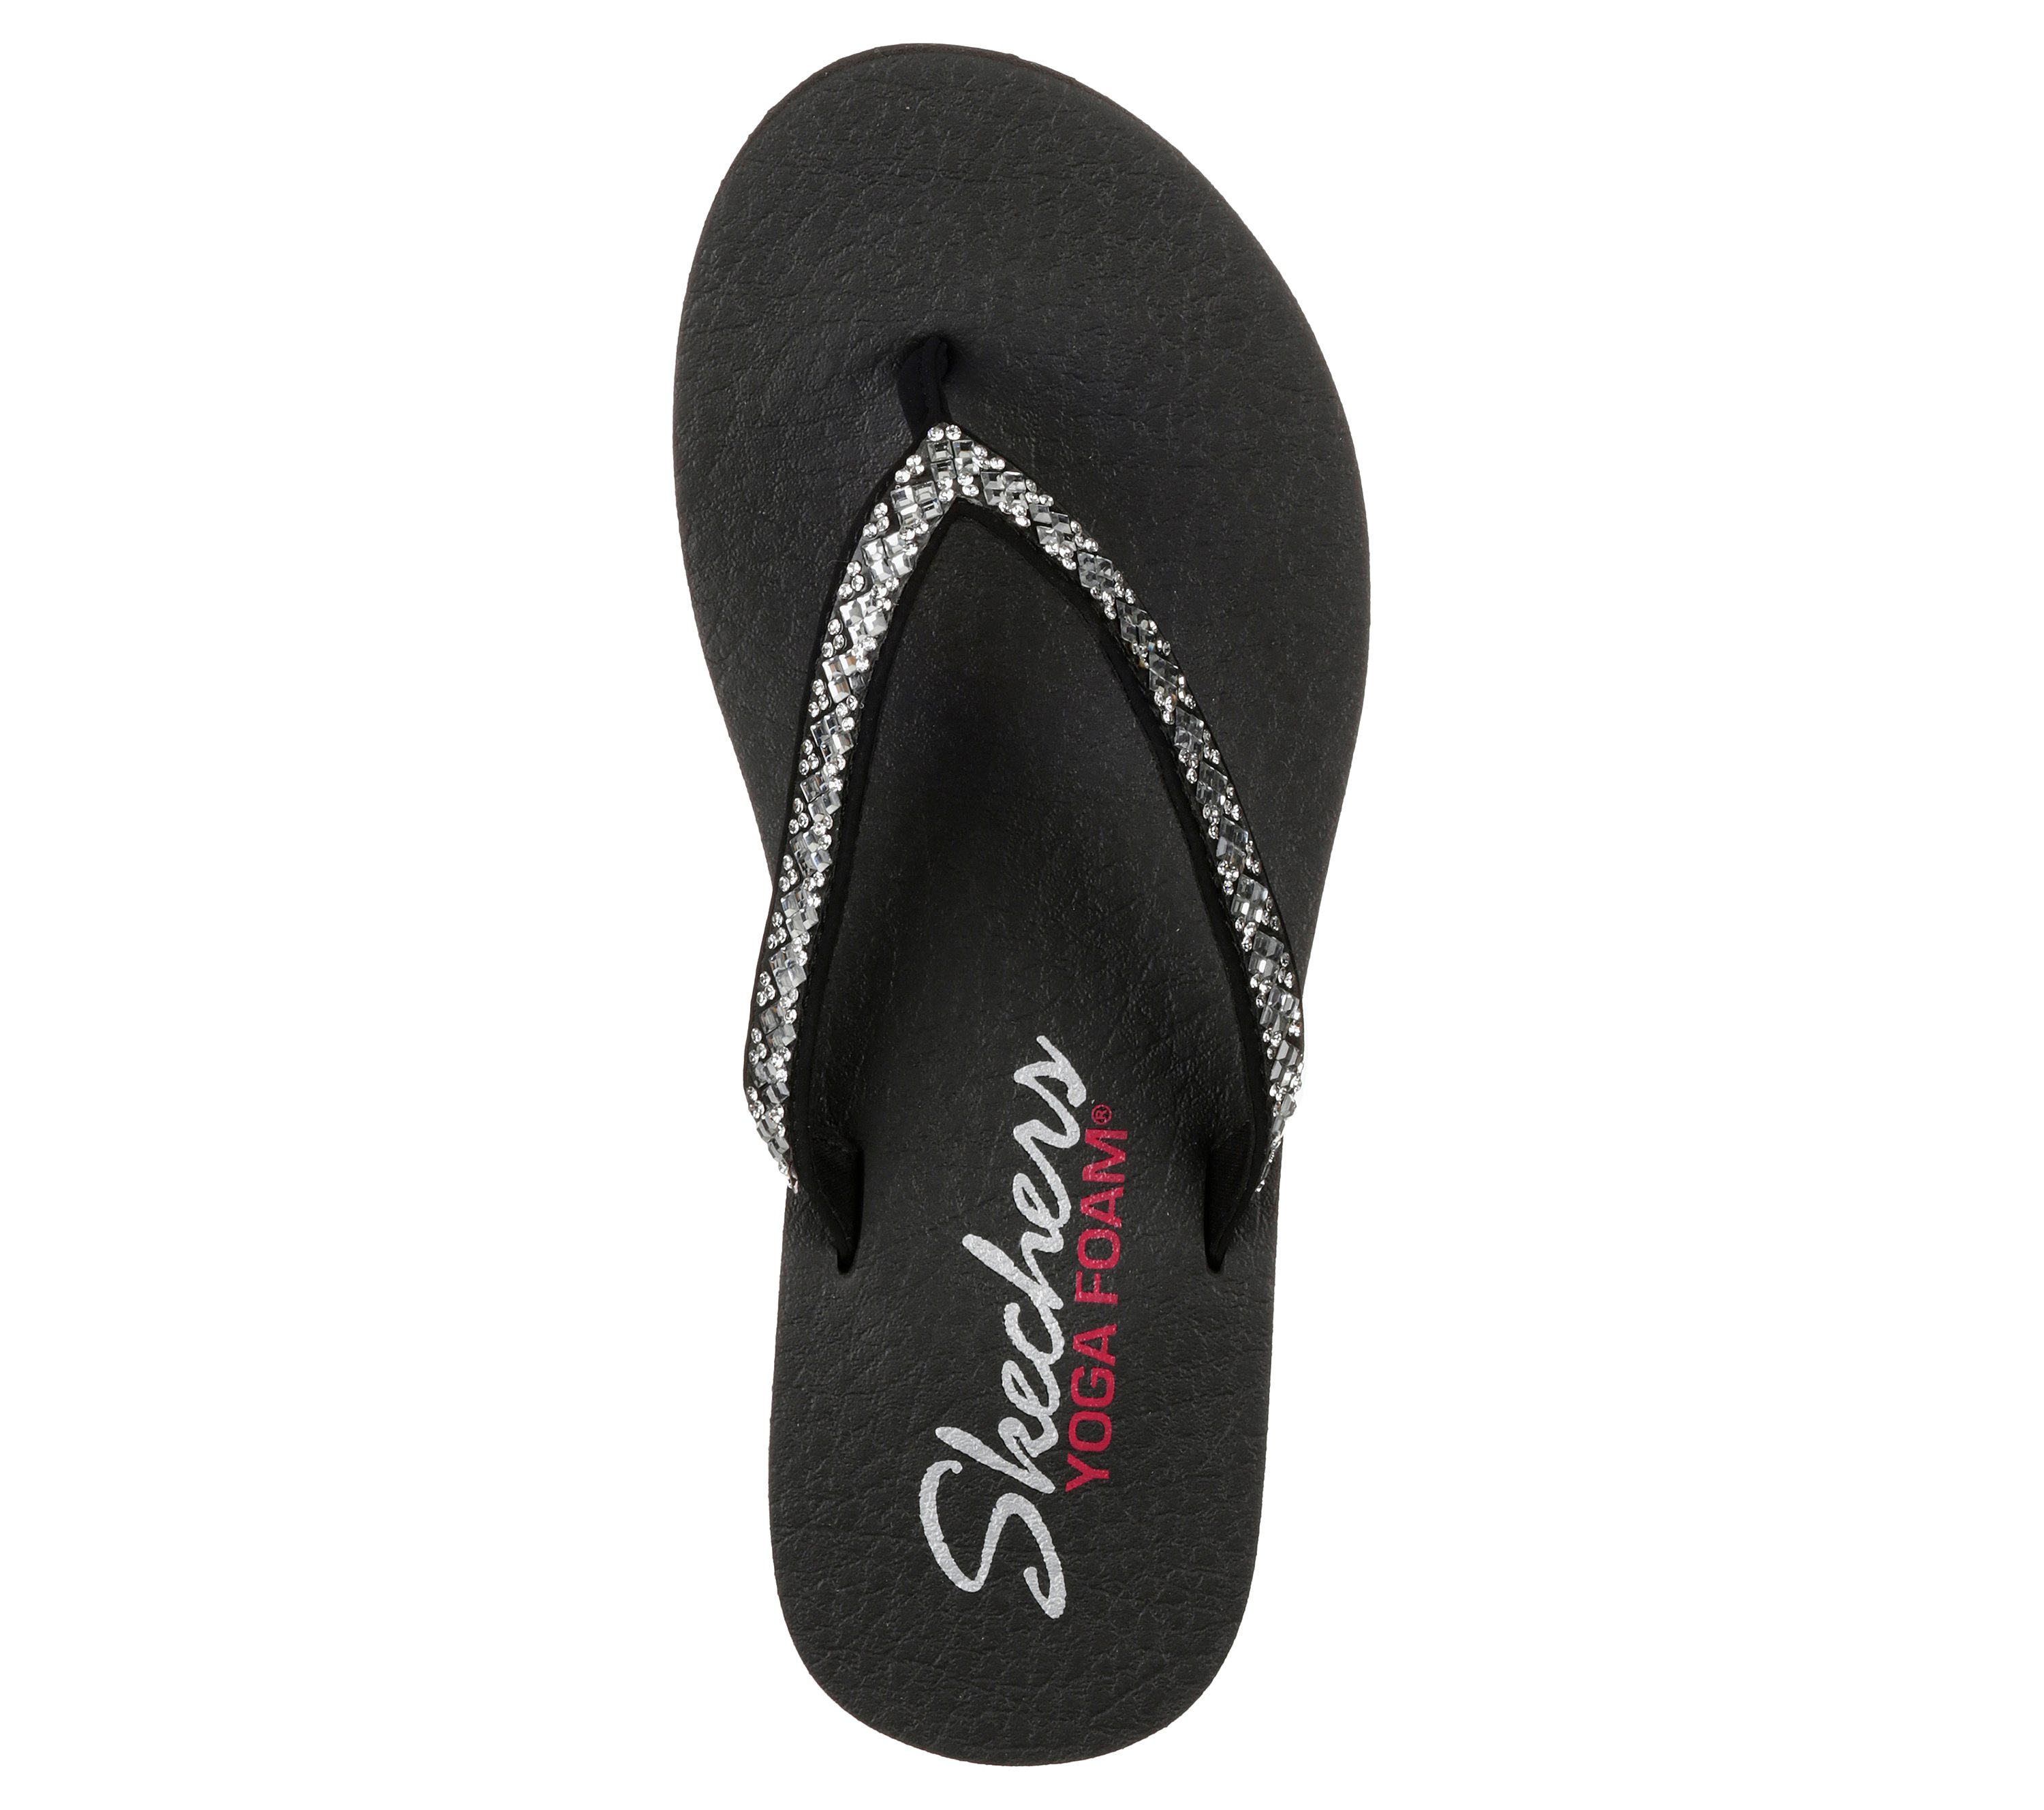 Skechers Women's Meditation Perfect 10 Thong Sandal, Black/Silver